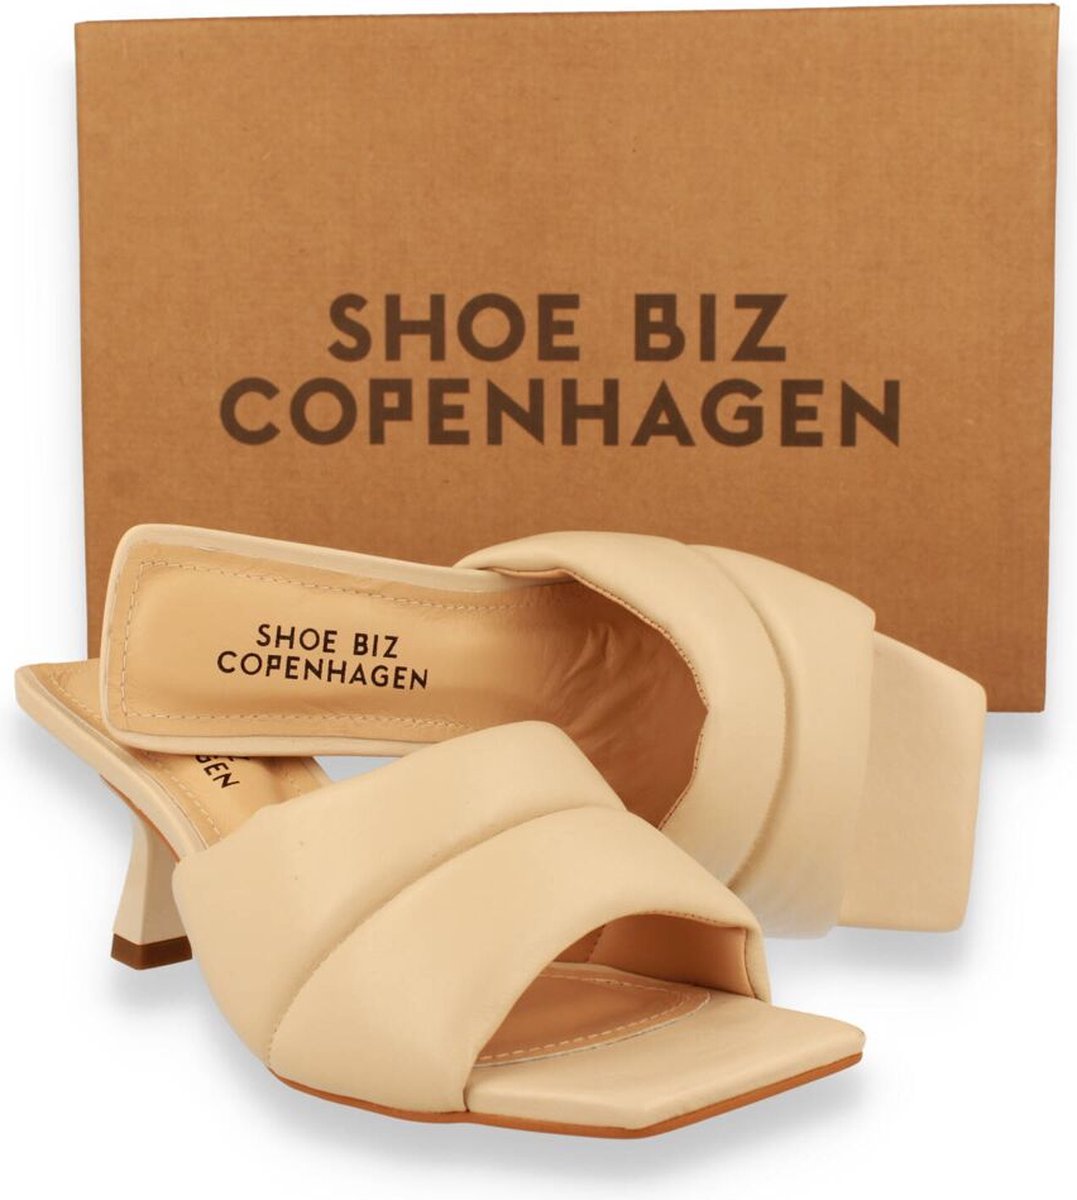 Copenhagen Shoebizz Shoe Biz Copenhagen dames Vix Smoothie BEIGE 41